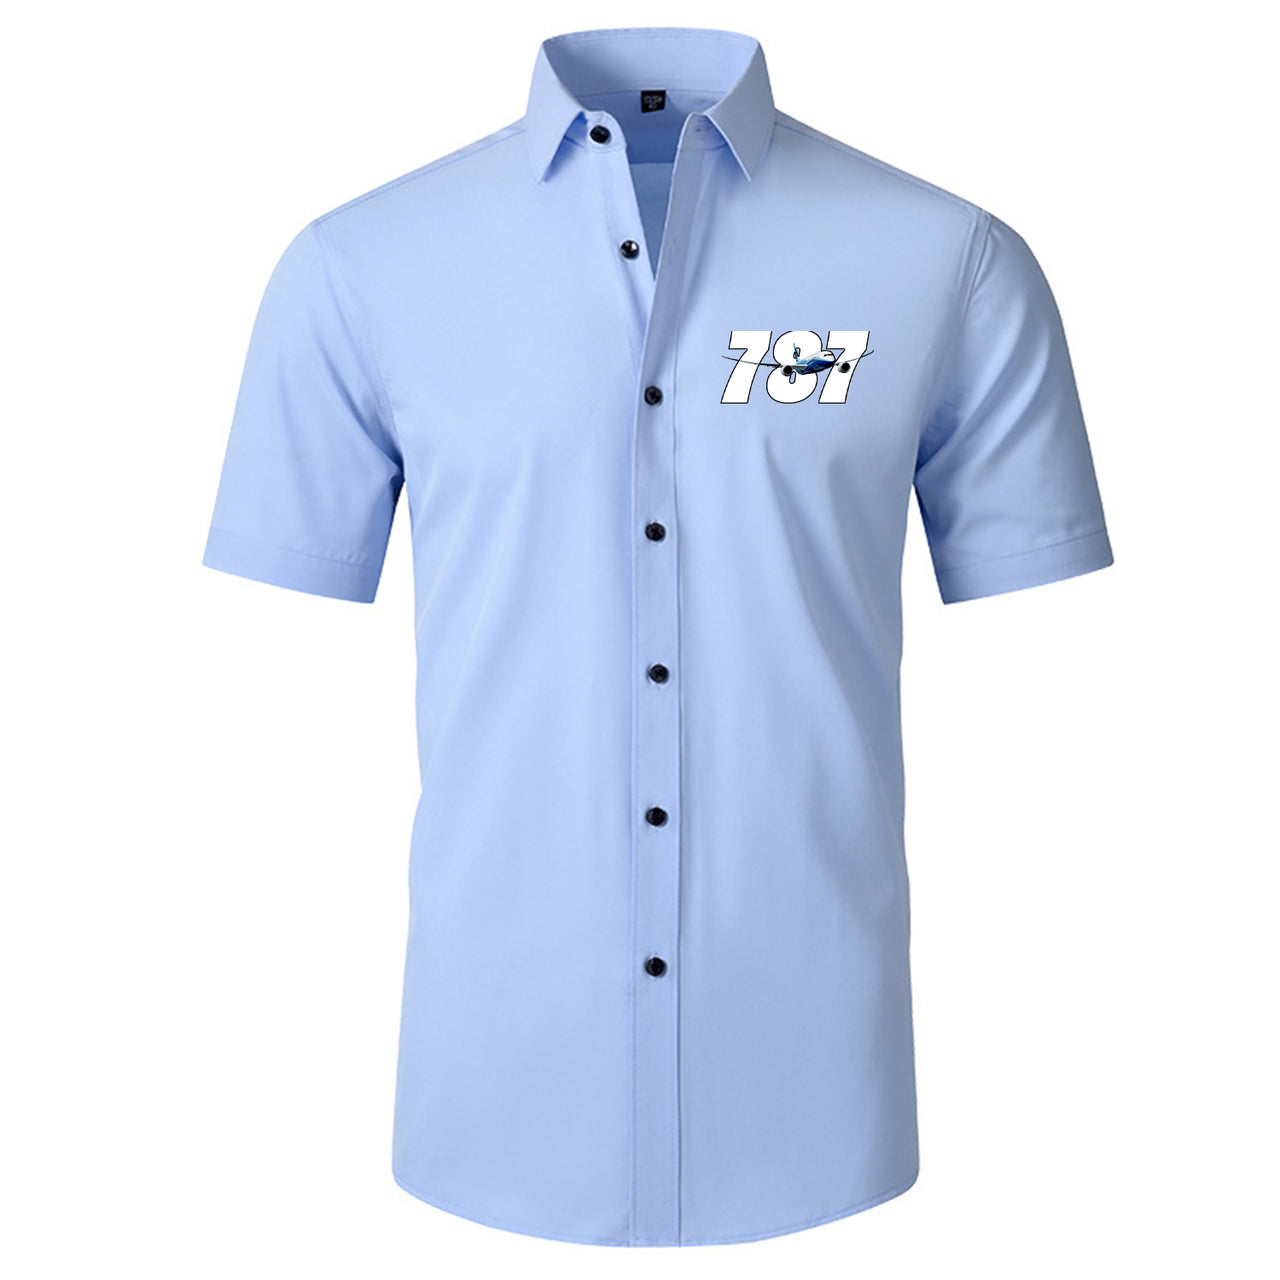 Super Boeing 787 Designed Short Sleeve Shirts